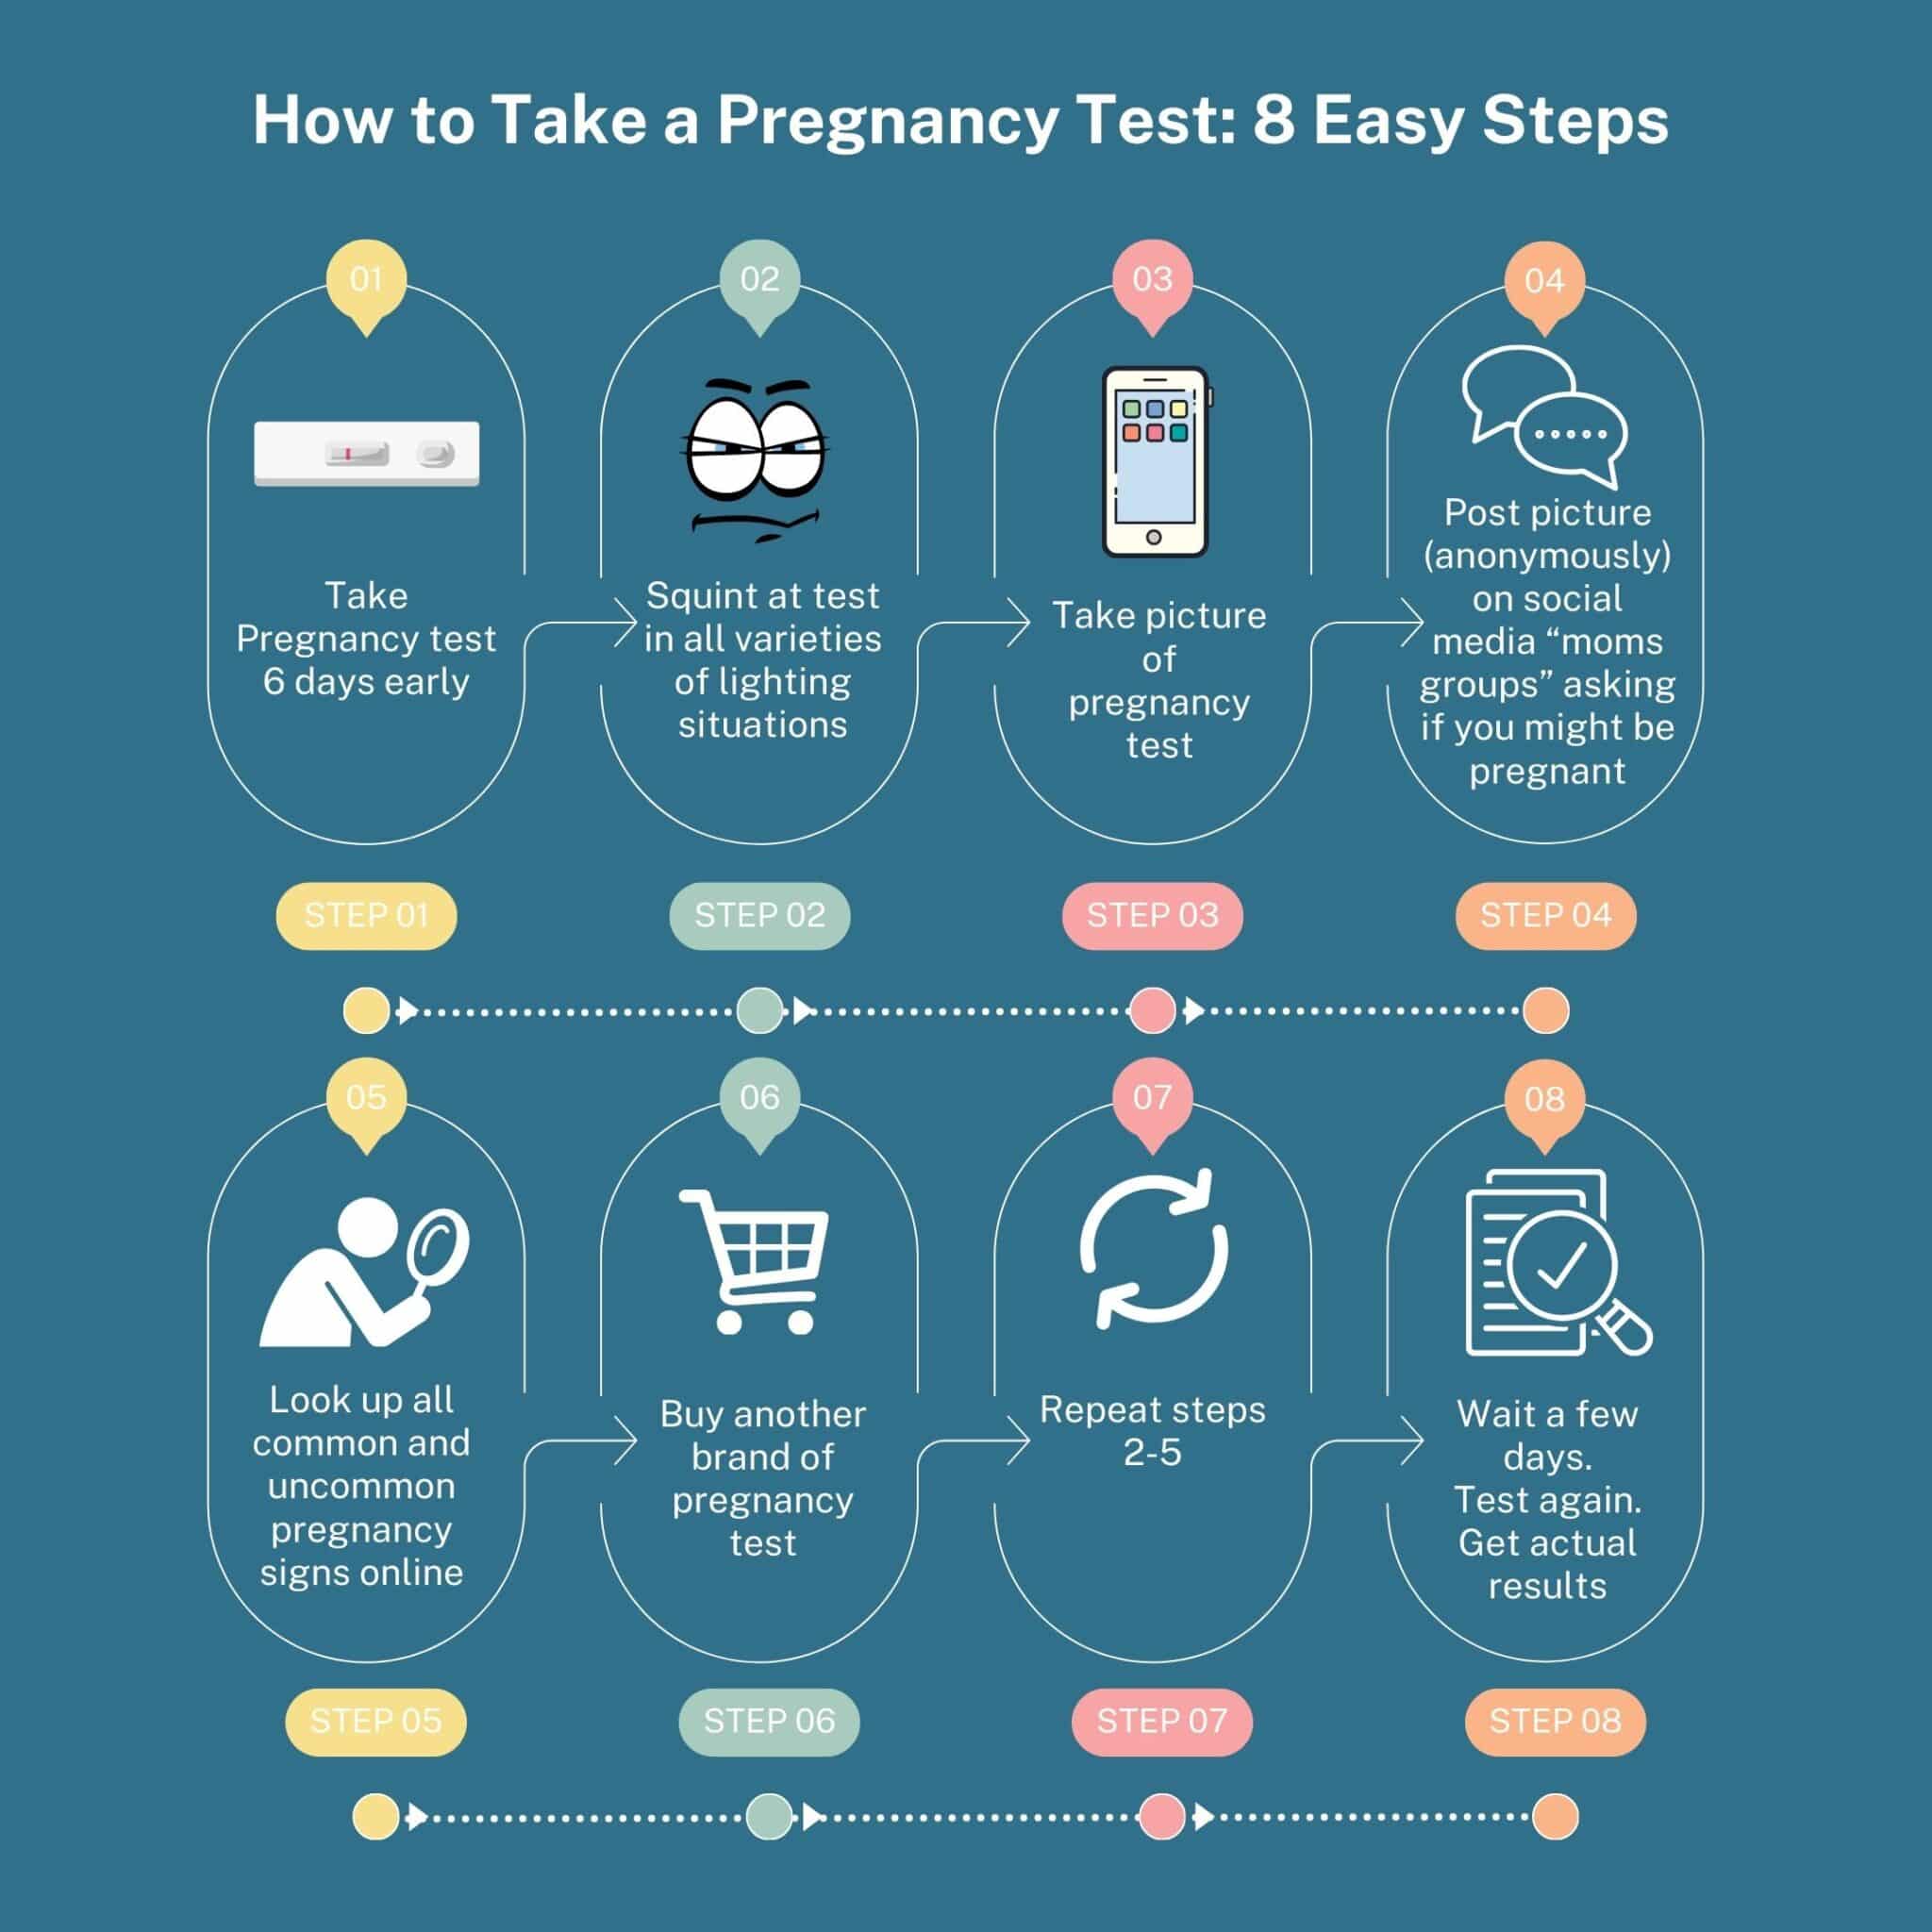 How to Take a Pregnancy Test: 8 Easy Steps